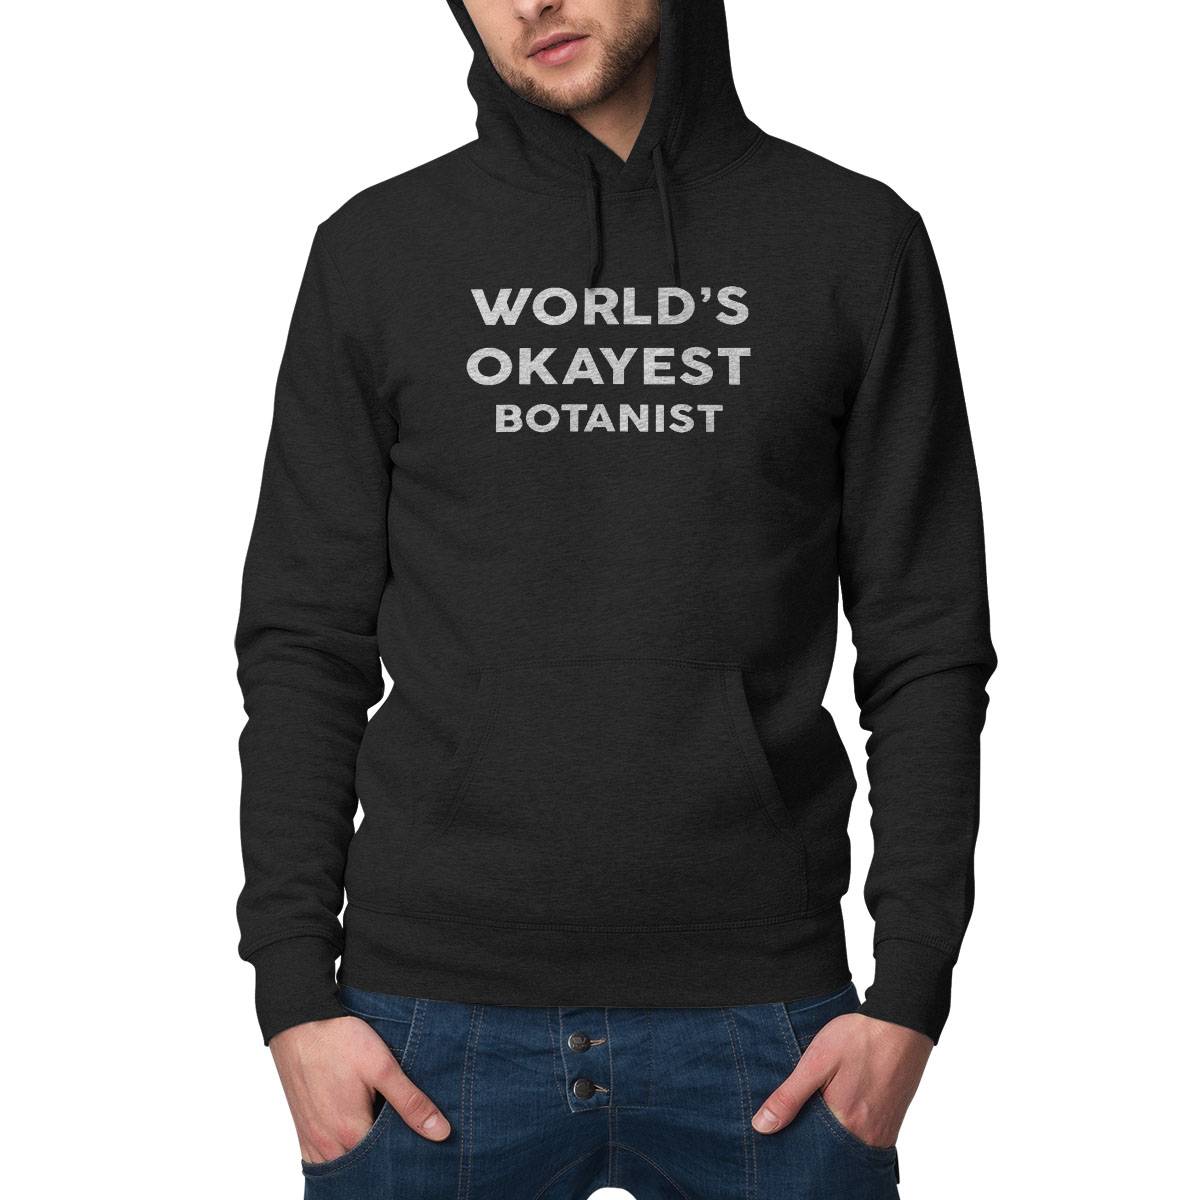 World'S Okayest Botanist T-Shirt For Botanists Shirt